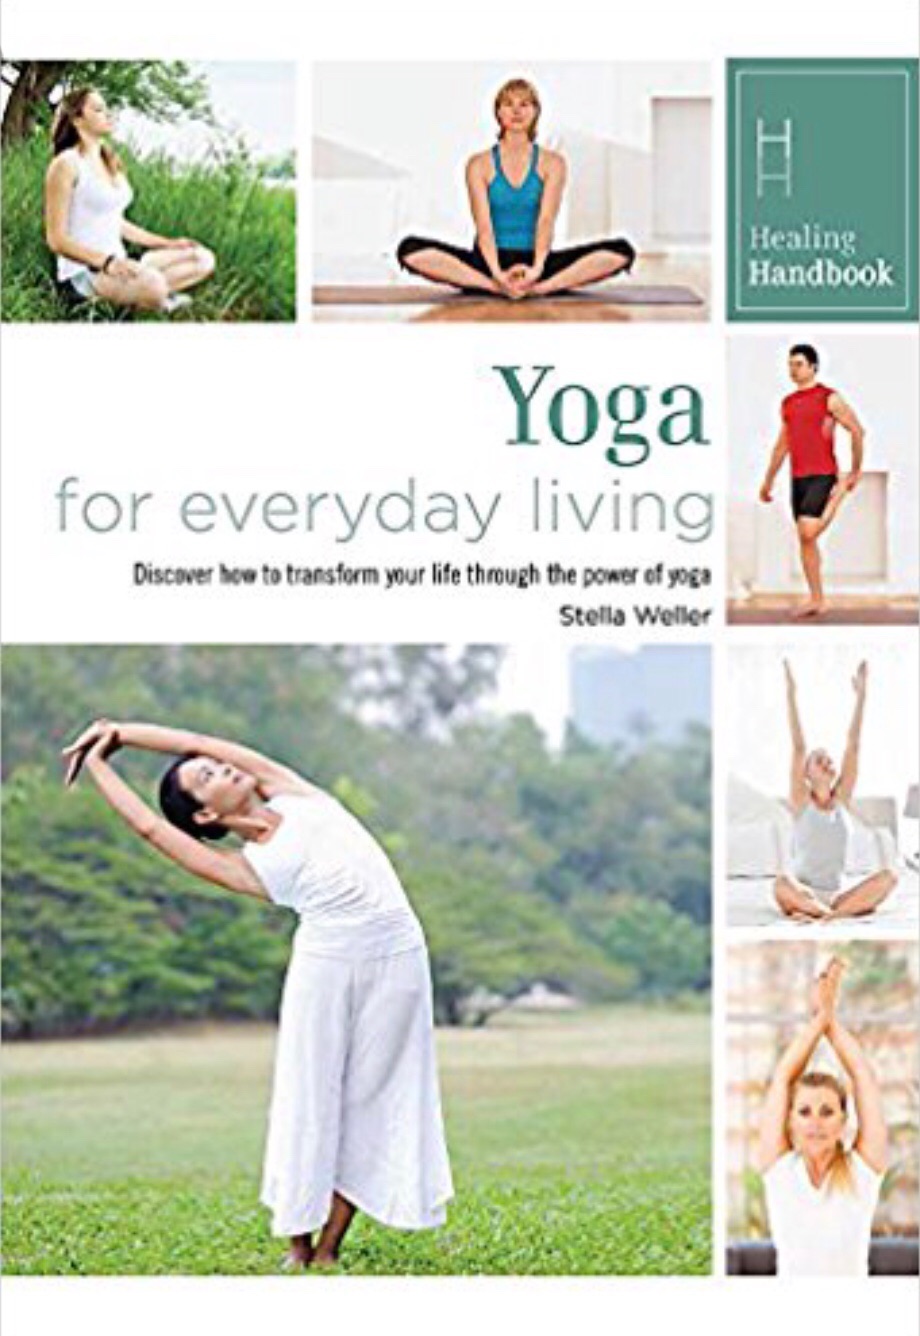 Healing Handbook - Yoga for Everyday Living